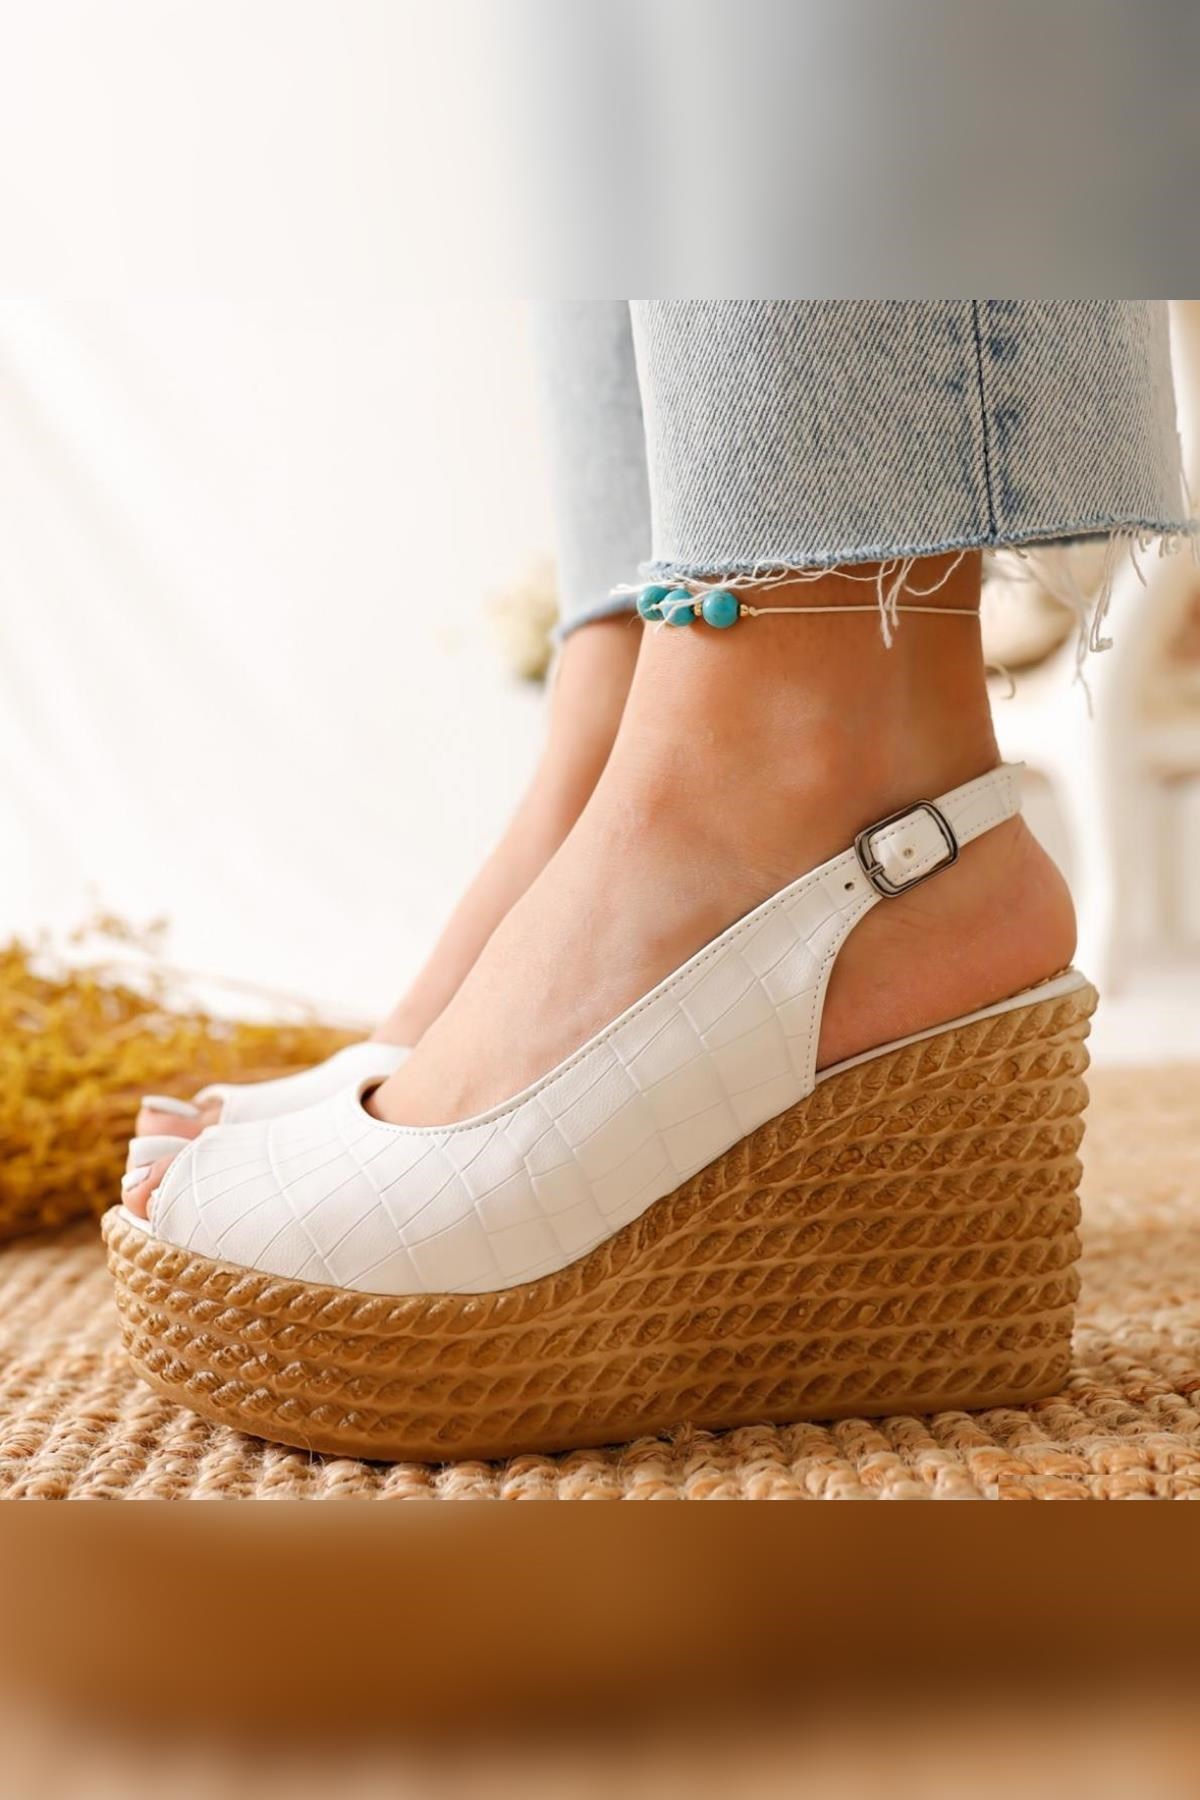 Marilyn Beyaz Kroko Dolgu Topuklu Sandalet